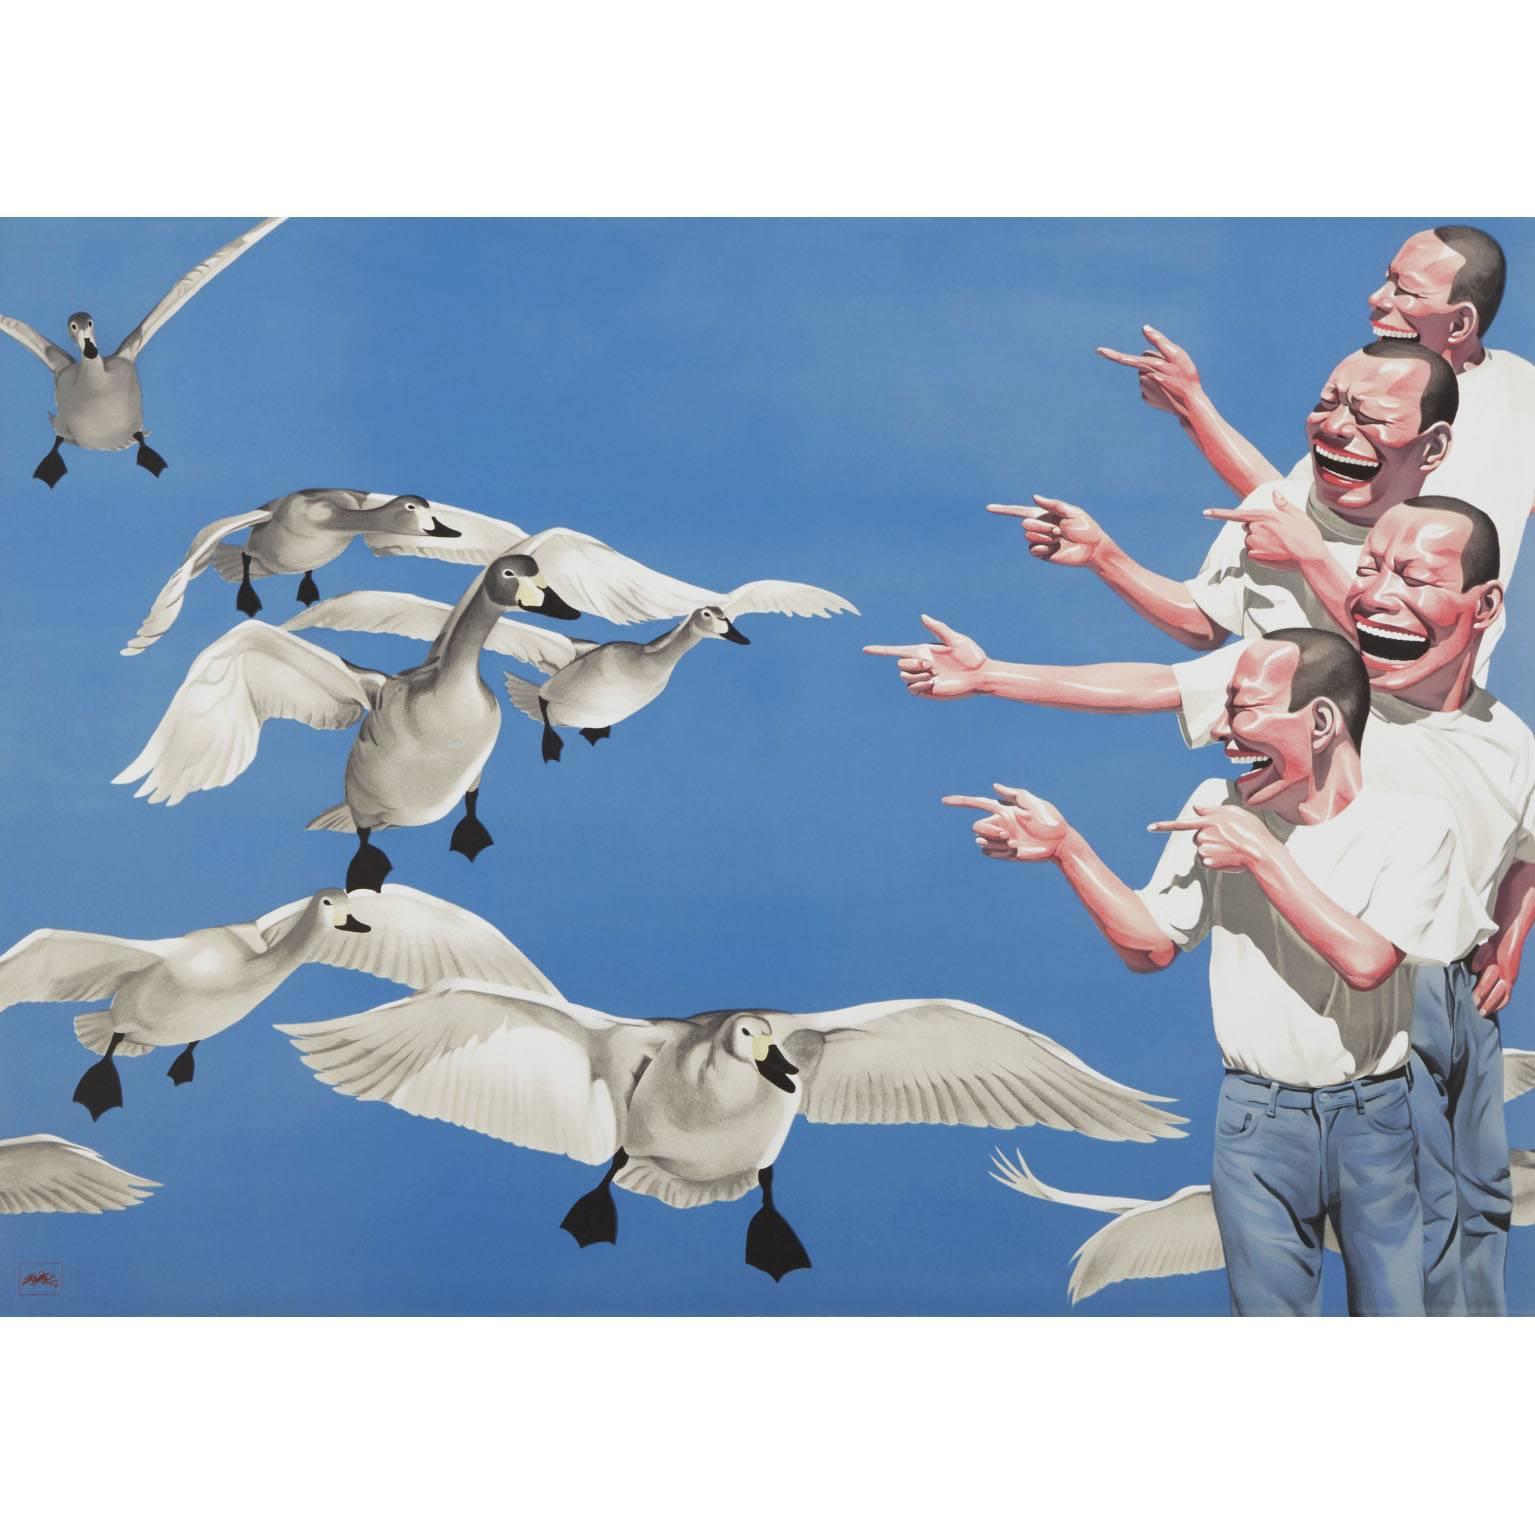 Big Swans - Print by Yue Minjun